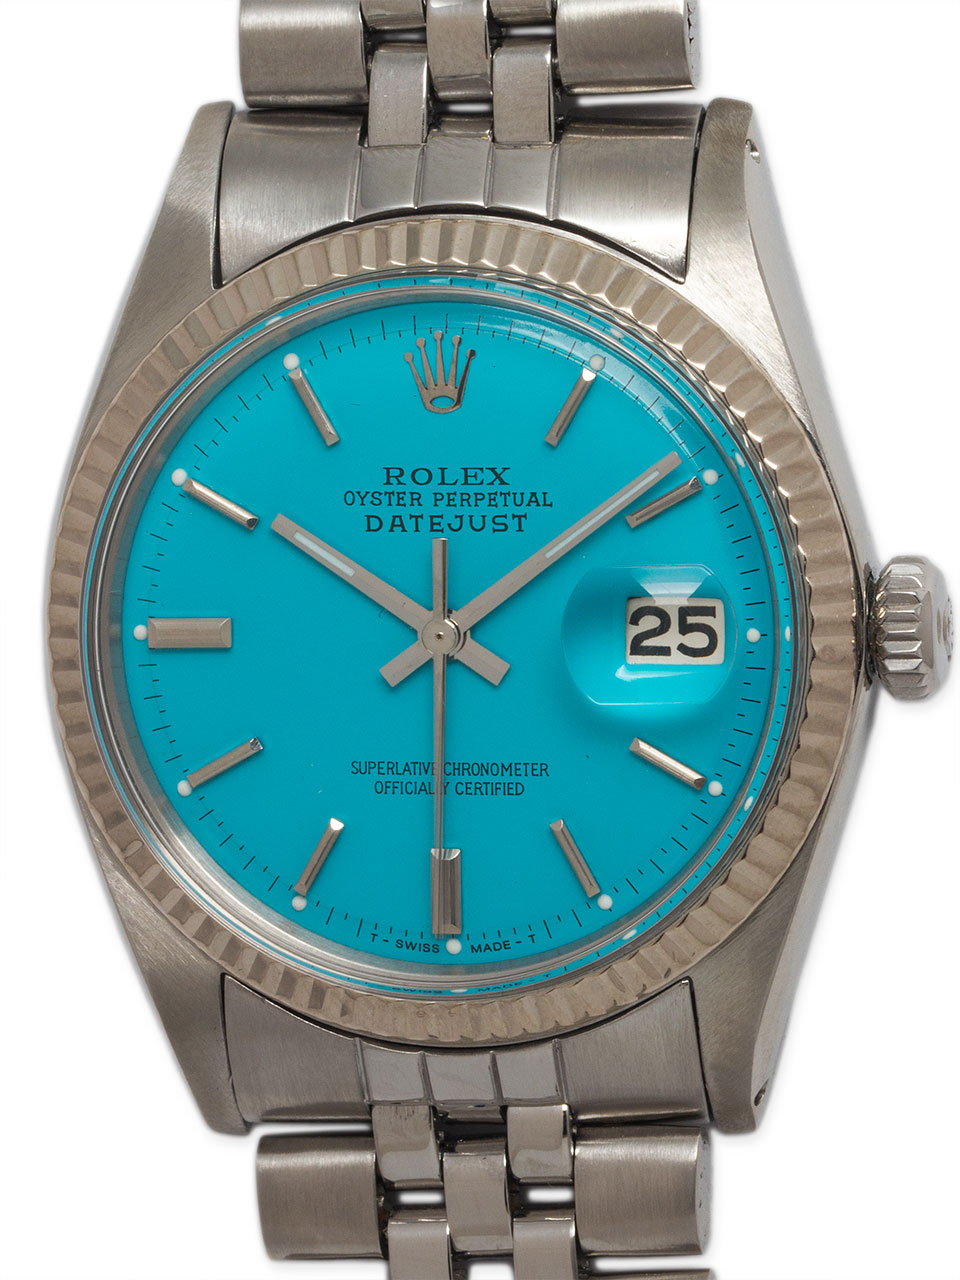 Rolex SS Datejust ref 1601 circa 1964 "Turquoise"